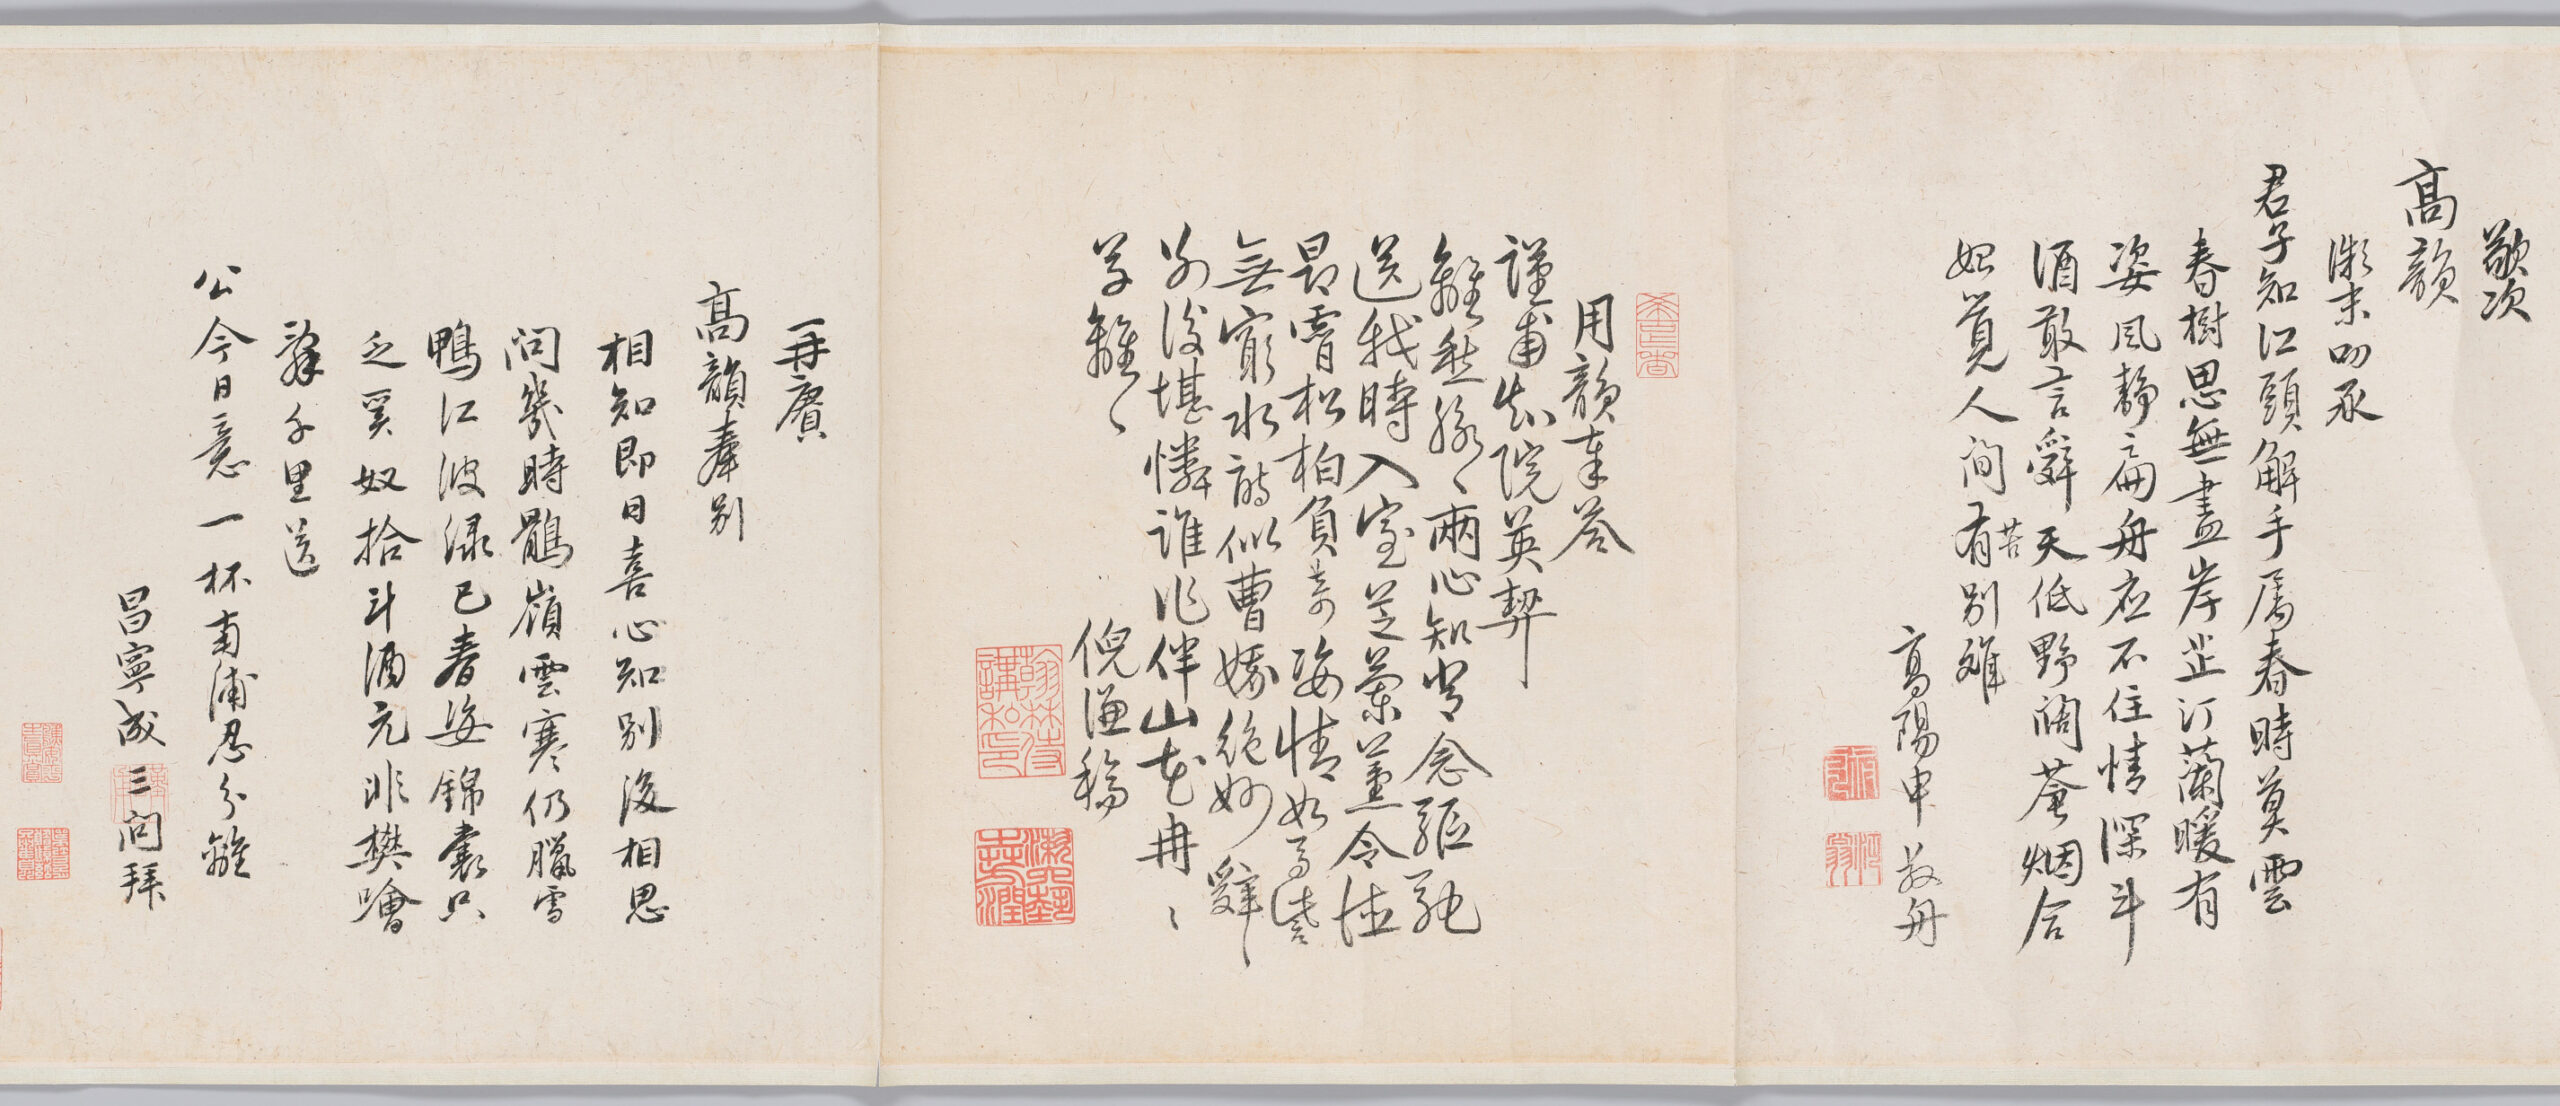 Bongsa Joseon Changhwa Sigwon (Poetry Book Between Ming Envoys and Joseon Literati) (detail), 1450, Joseon Dynasty, Korea, ink on paper, 33 x 1600 cm (The National Museum of Korea, Treasure 1404)